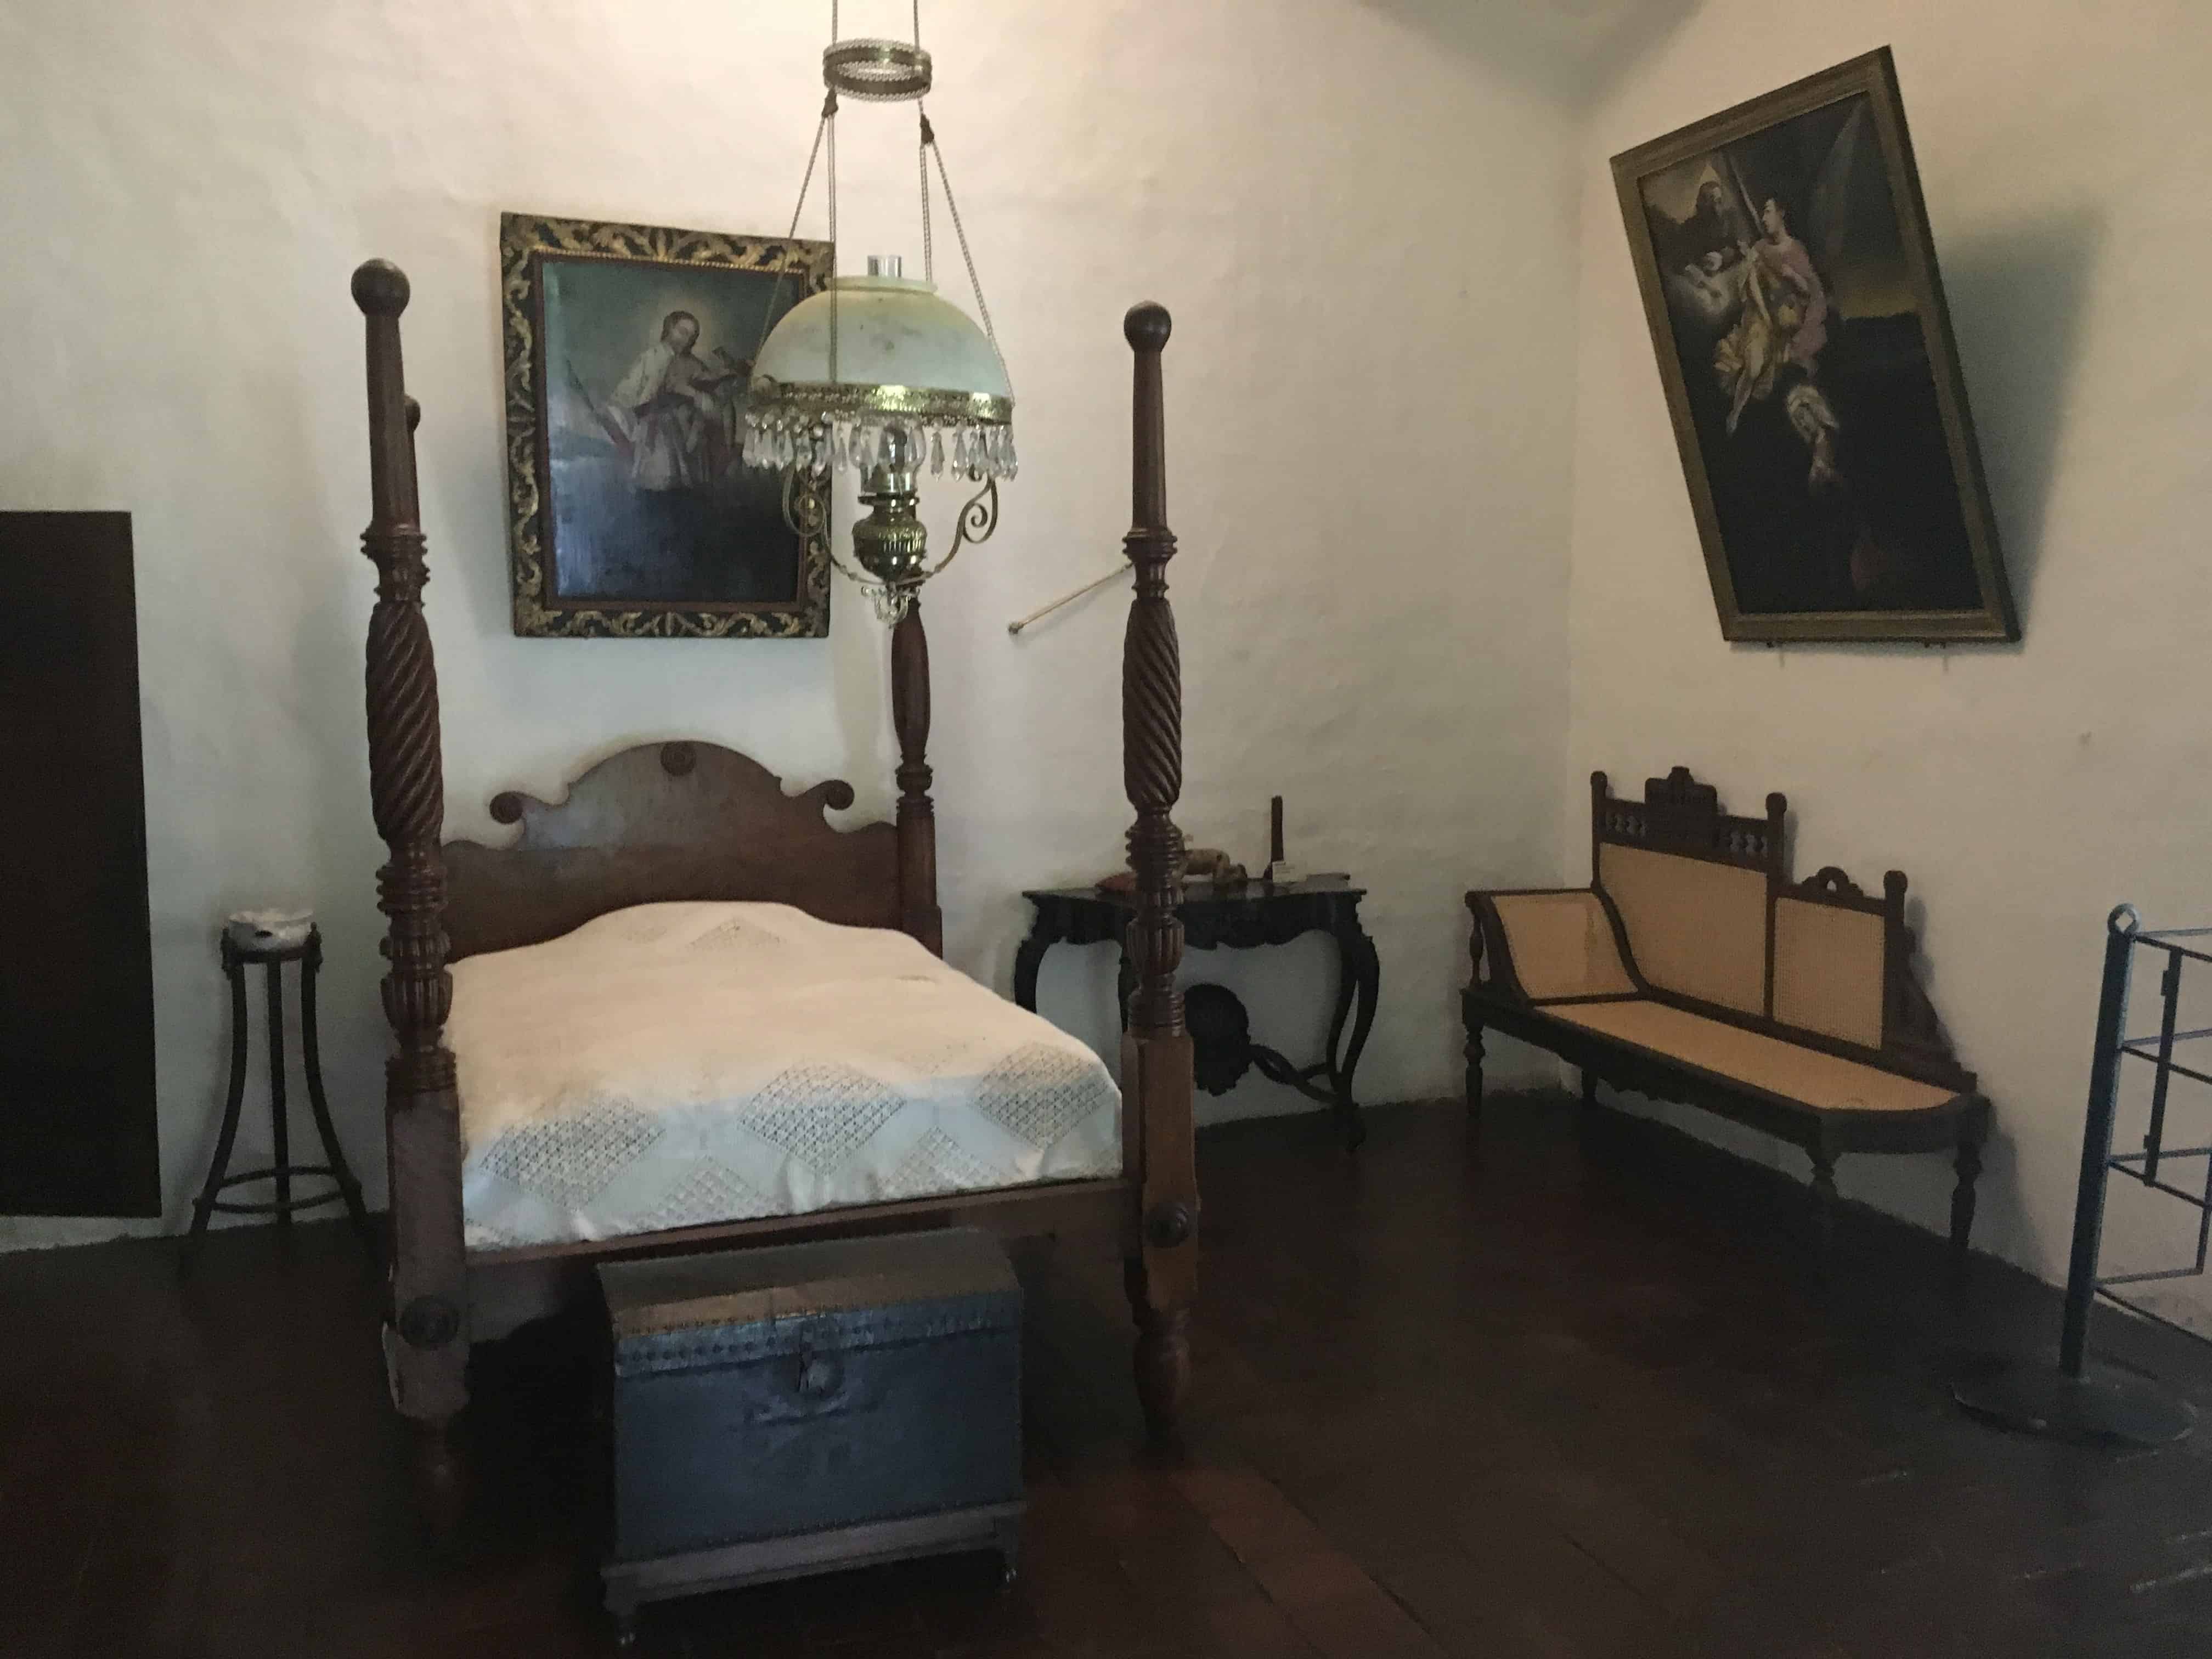 Bedroom at Hacienda Piedechinche at the Sugarcane Museum in Valle del Cauca, Colombia